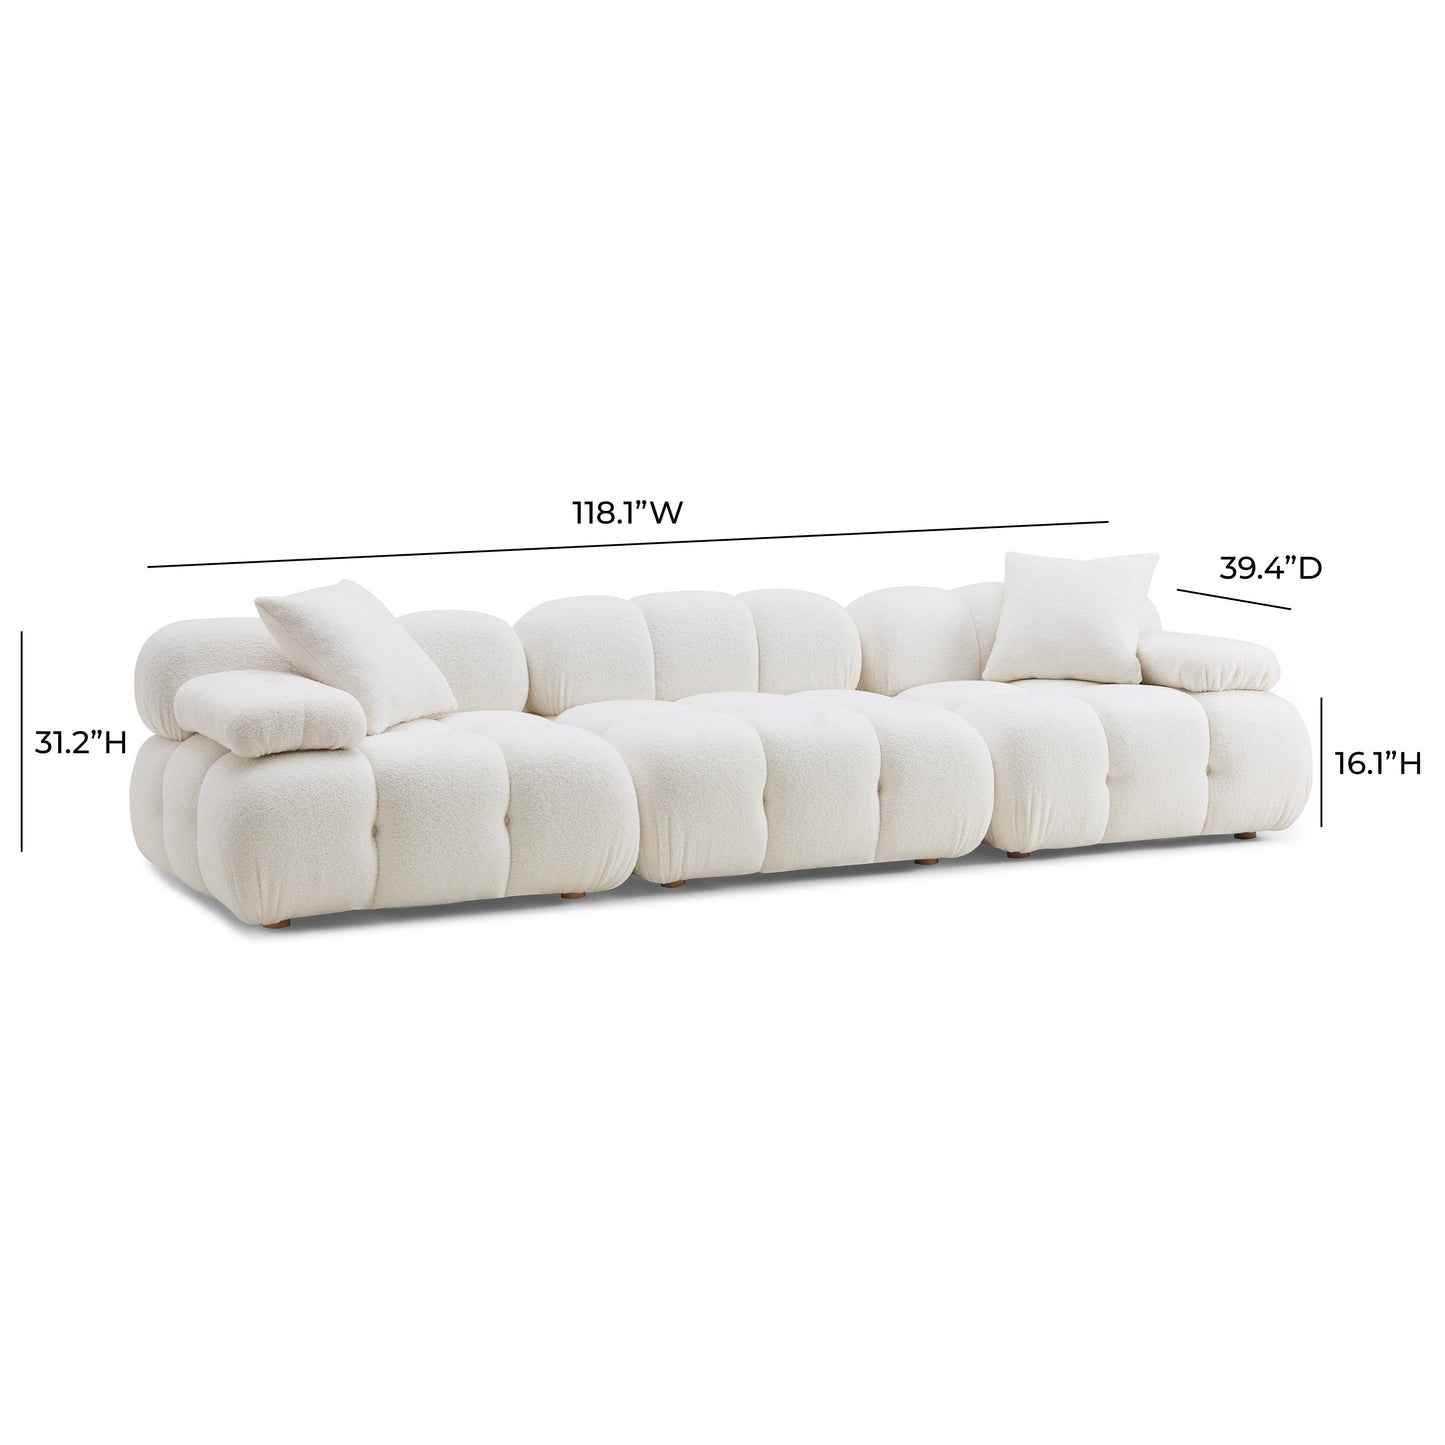 earl cream vegan shearling modular sofa